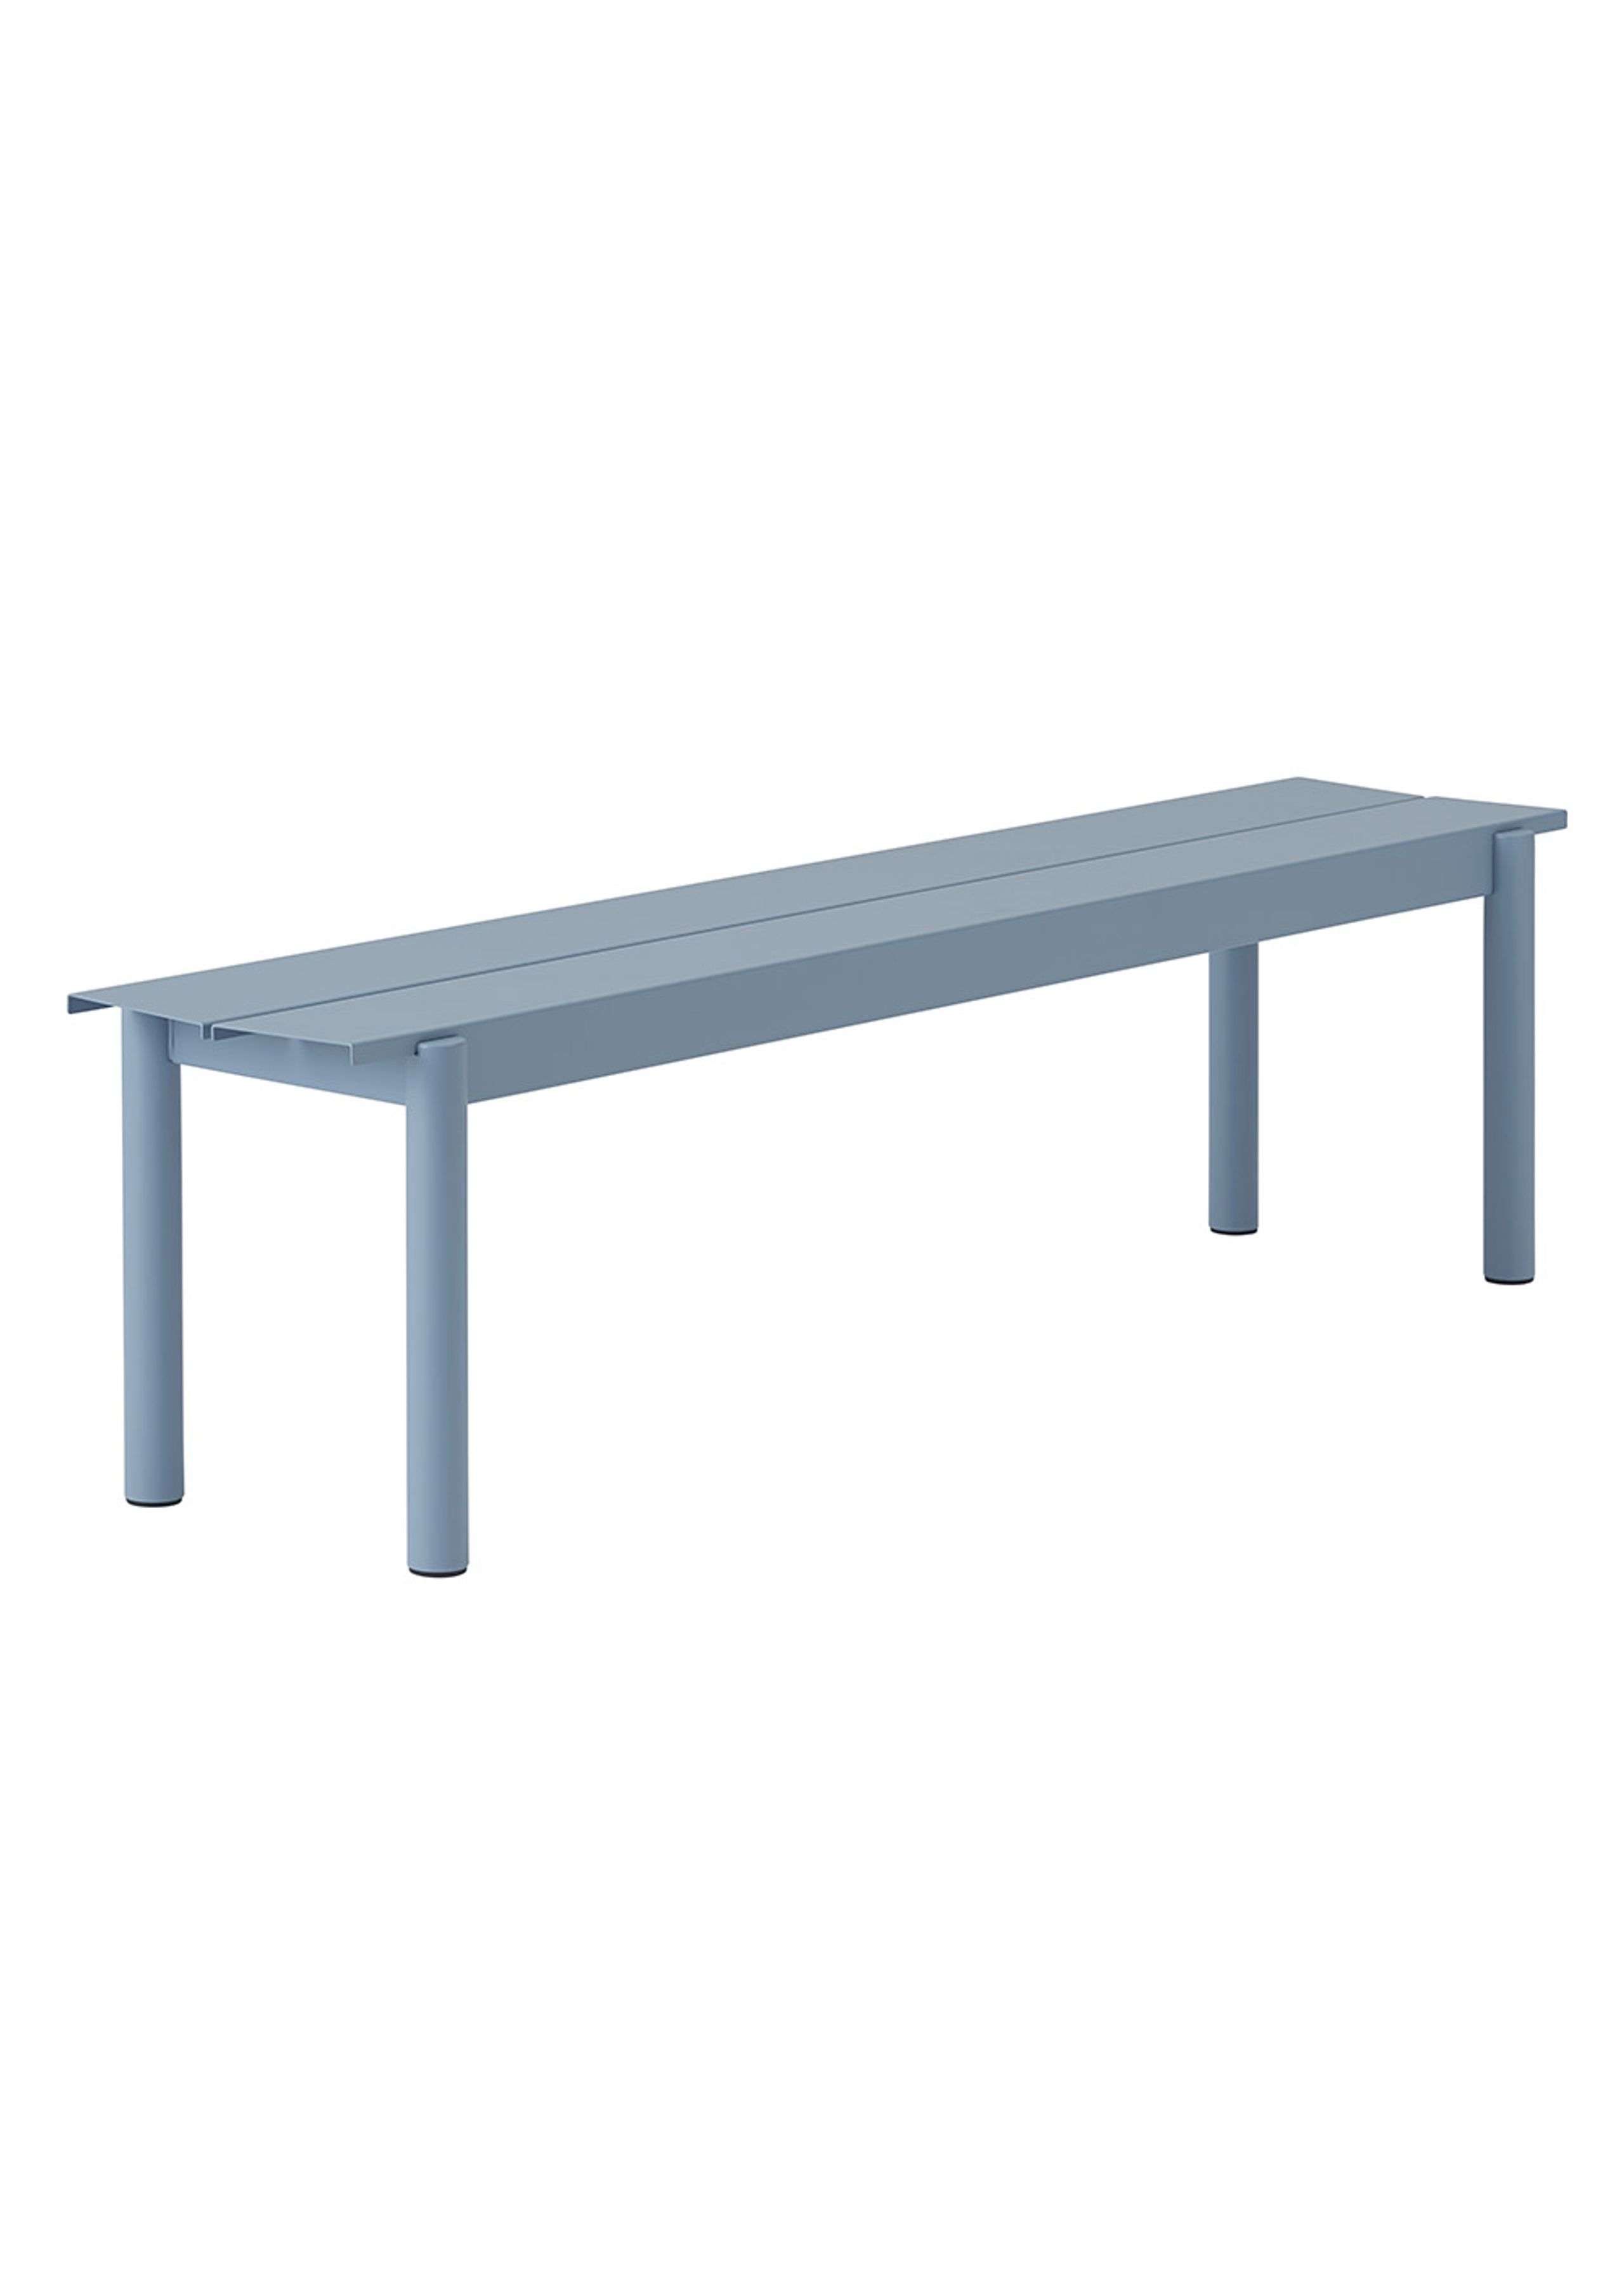 Muuto - Établi - Linear Steel Bench - Pale Blue